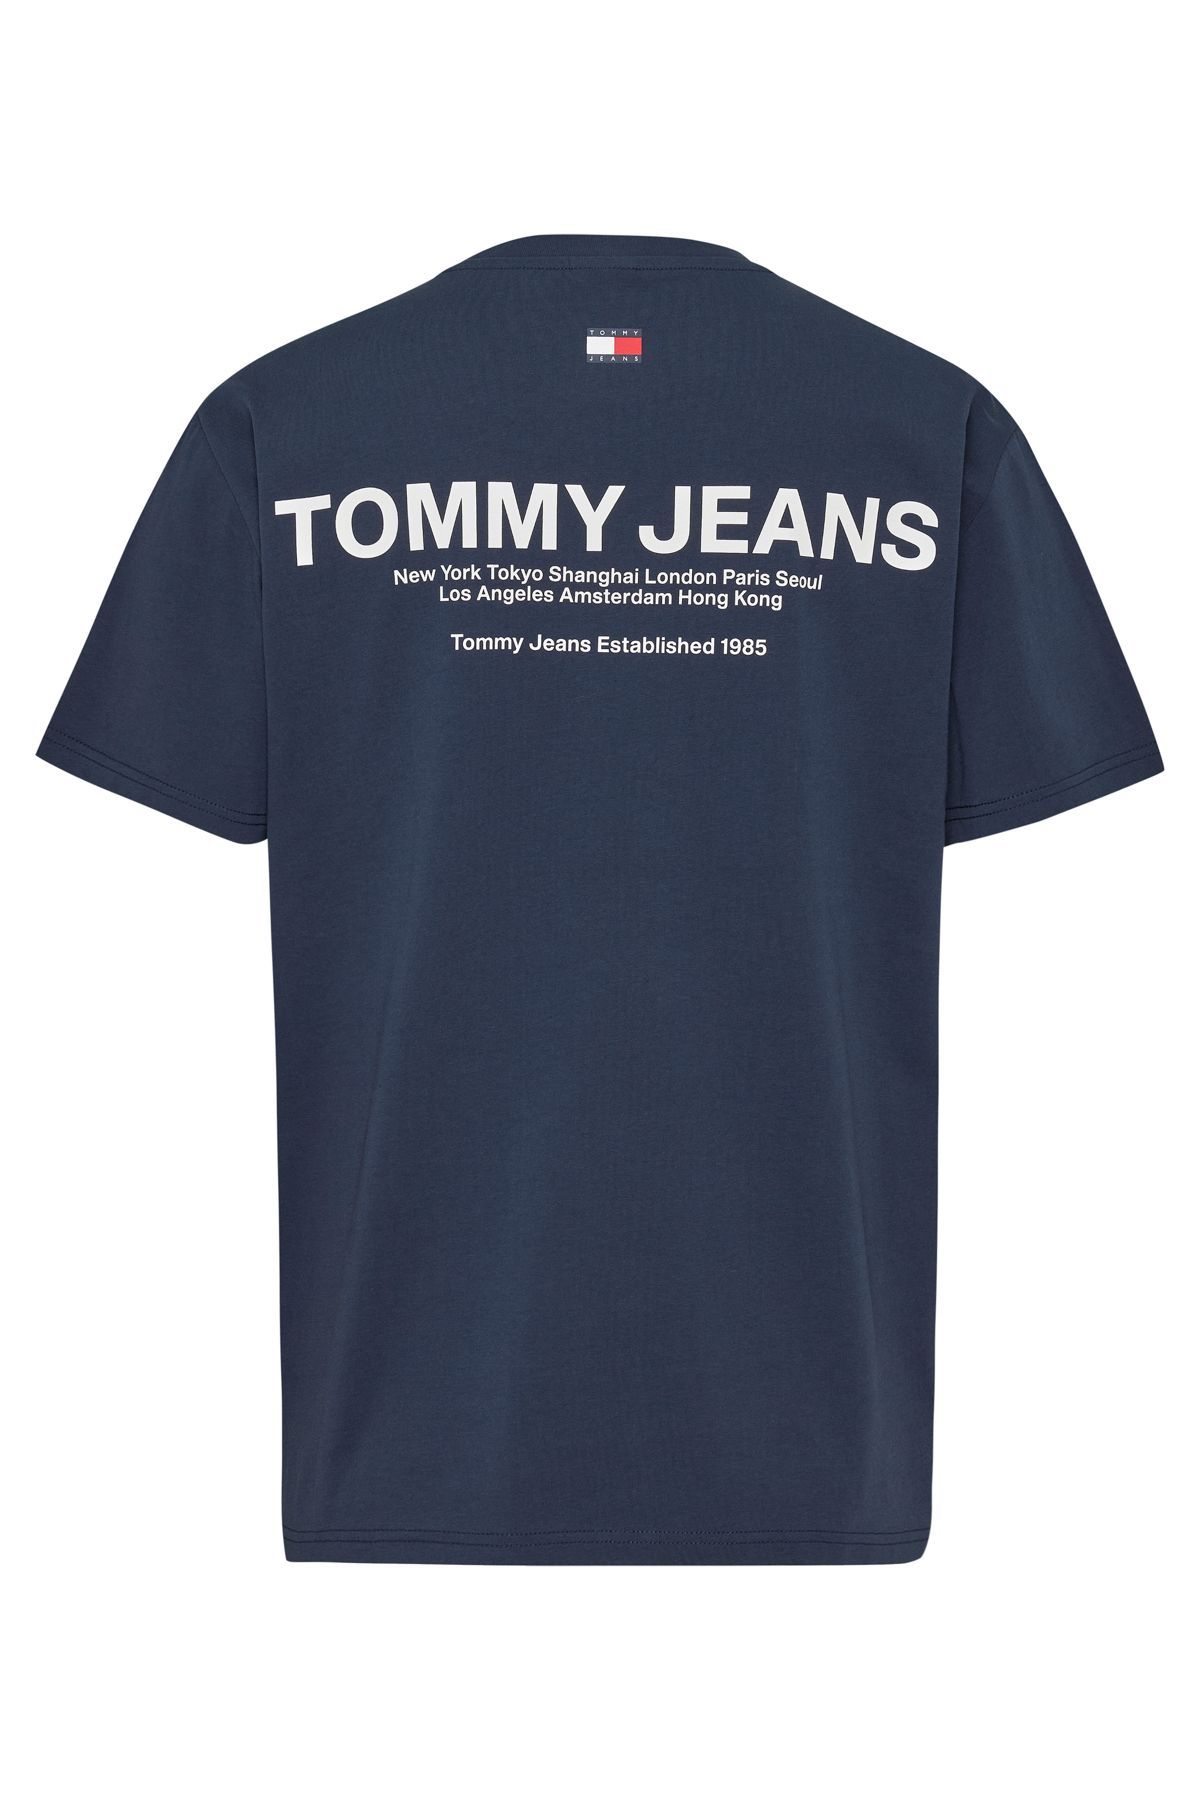 Tommy Hilfiger T-Shirt Herren Twilight Navy - Trendyol